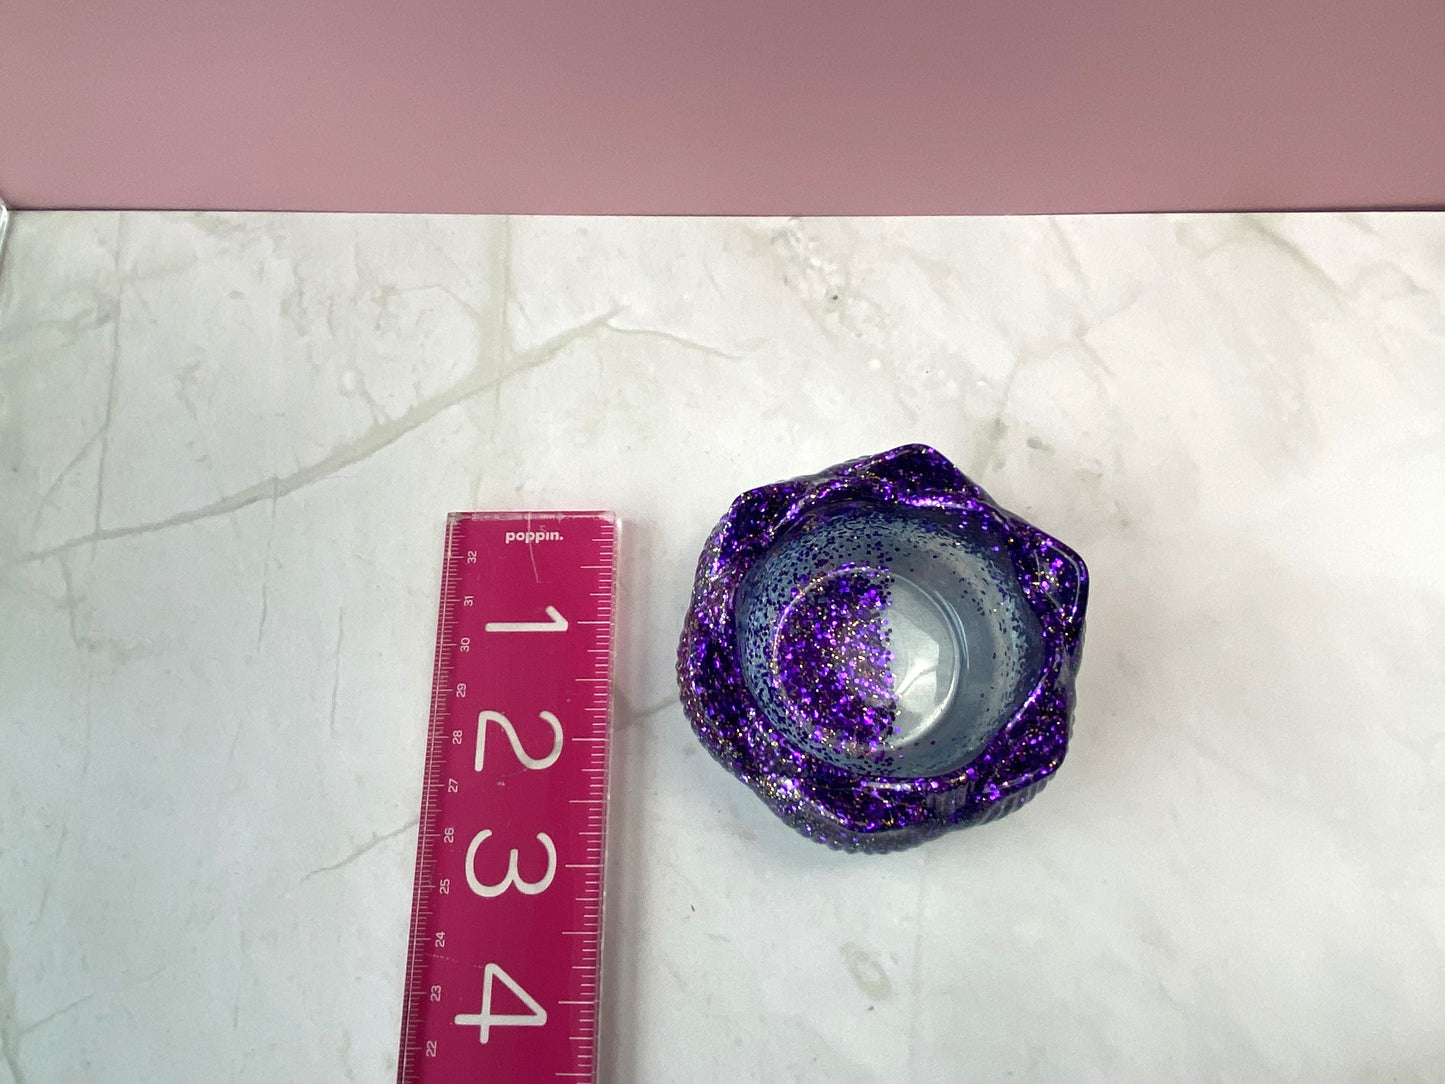 Blue Pearl & Purple Glitter Lotus Candle Holder | Handmade Home Decor